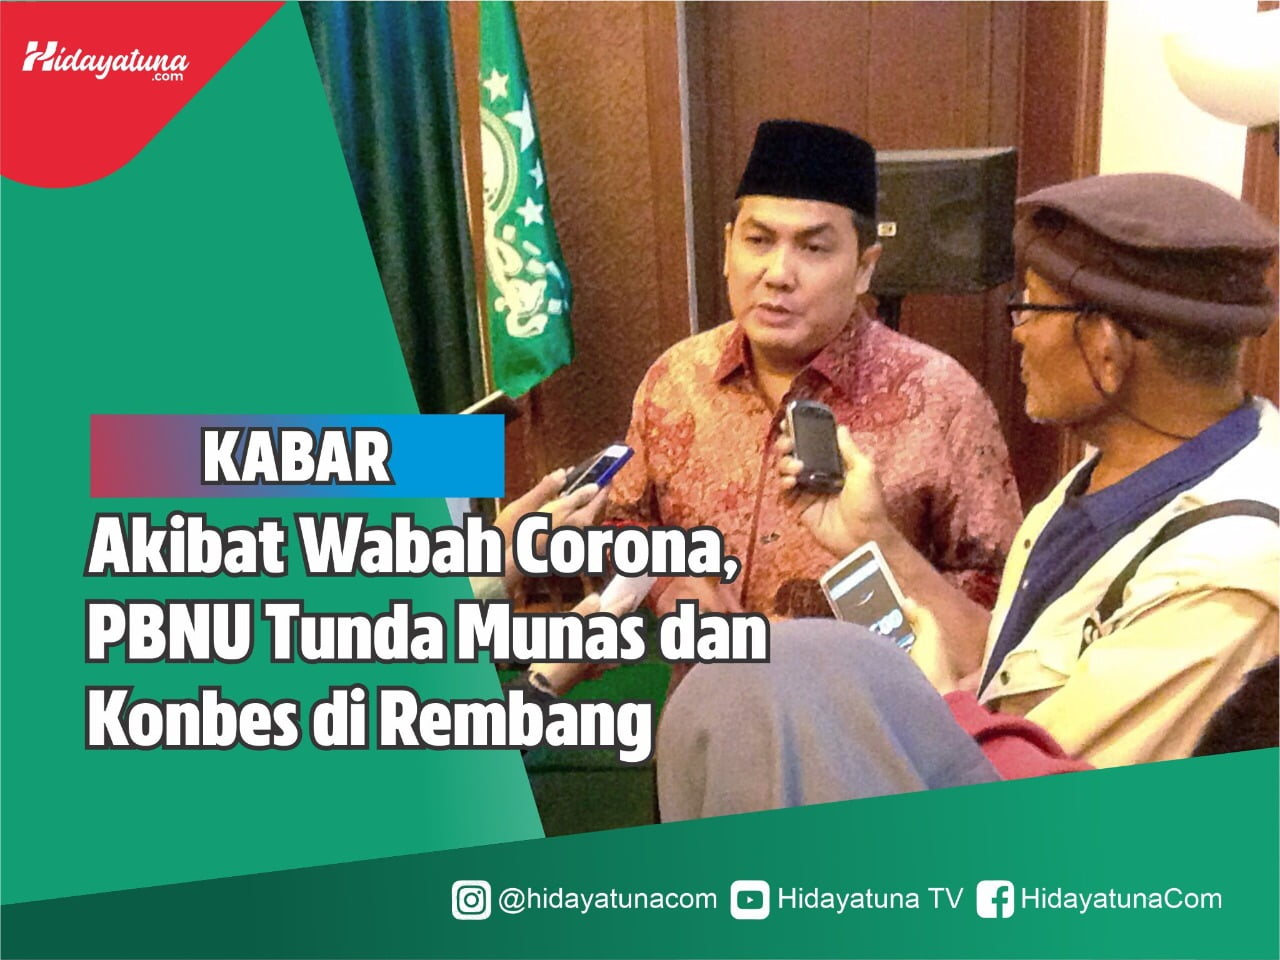  Akibat Wabah Corona, PBNU Tunda Munas dan Konbes di Rembang